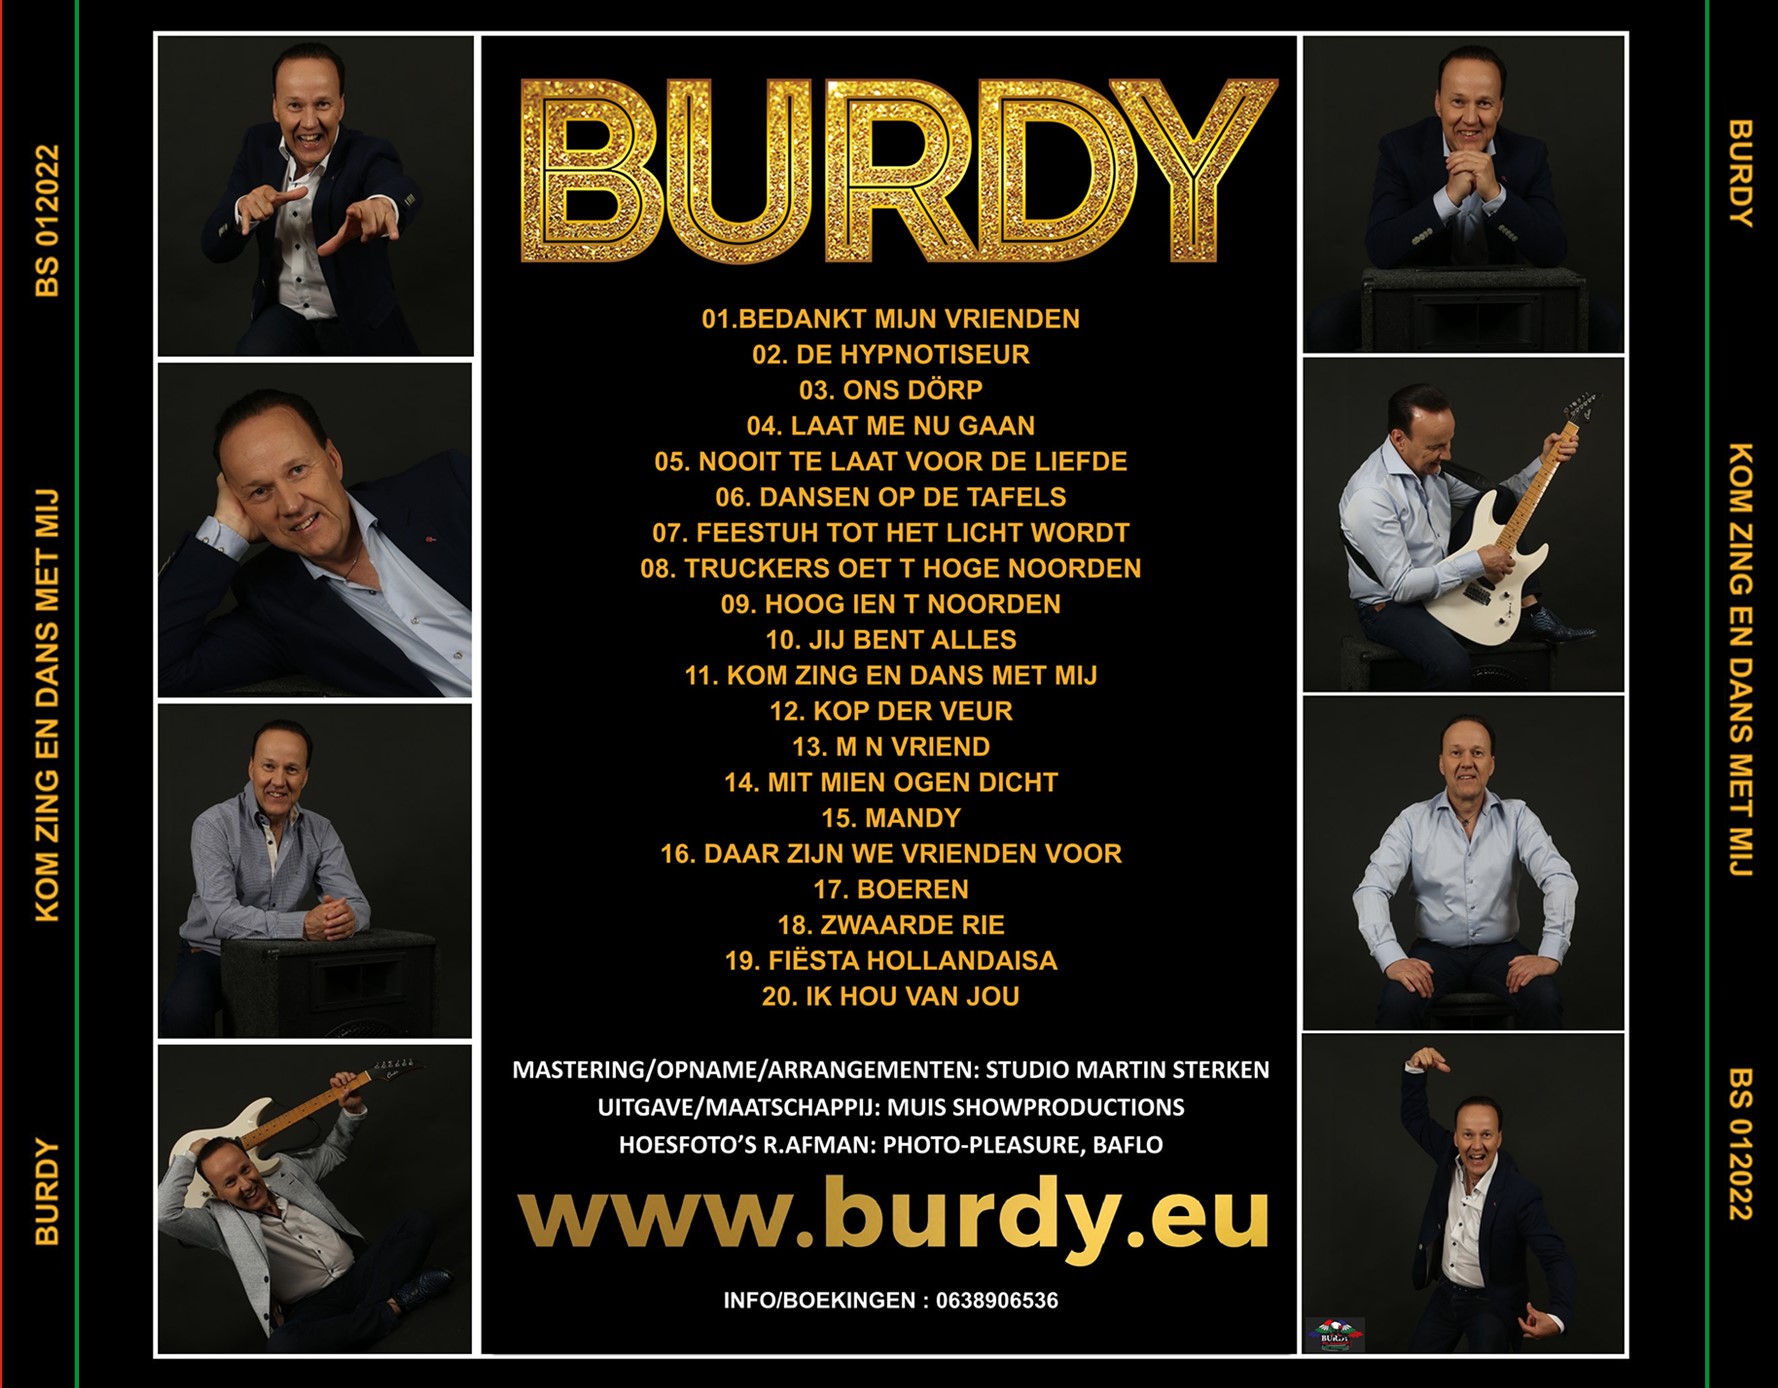 Leer Vervagen Briljant CD Burdy – Kom zing en dans met mij ( 20 titels – promo ) – Burdy